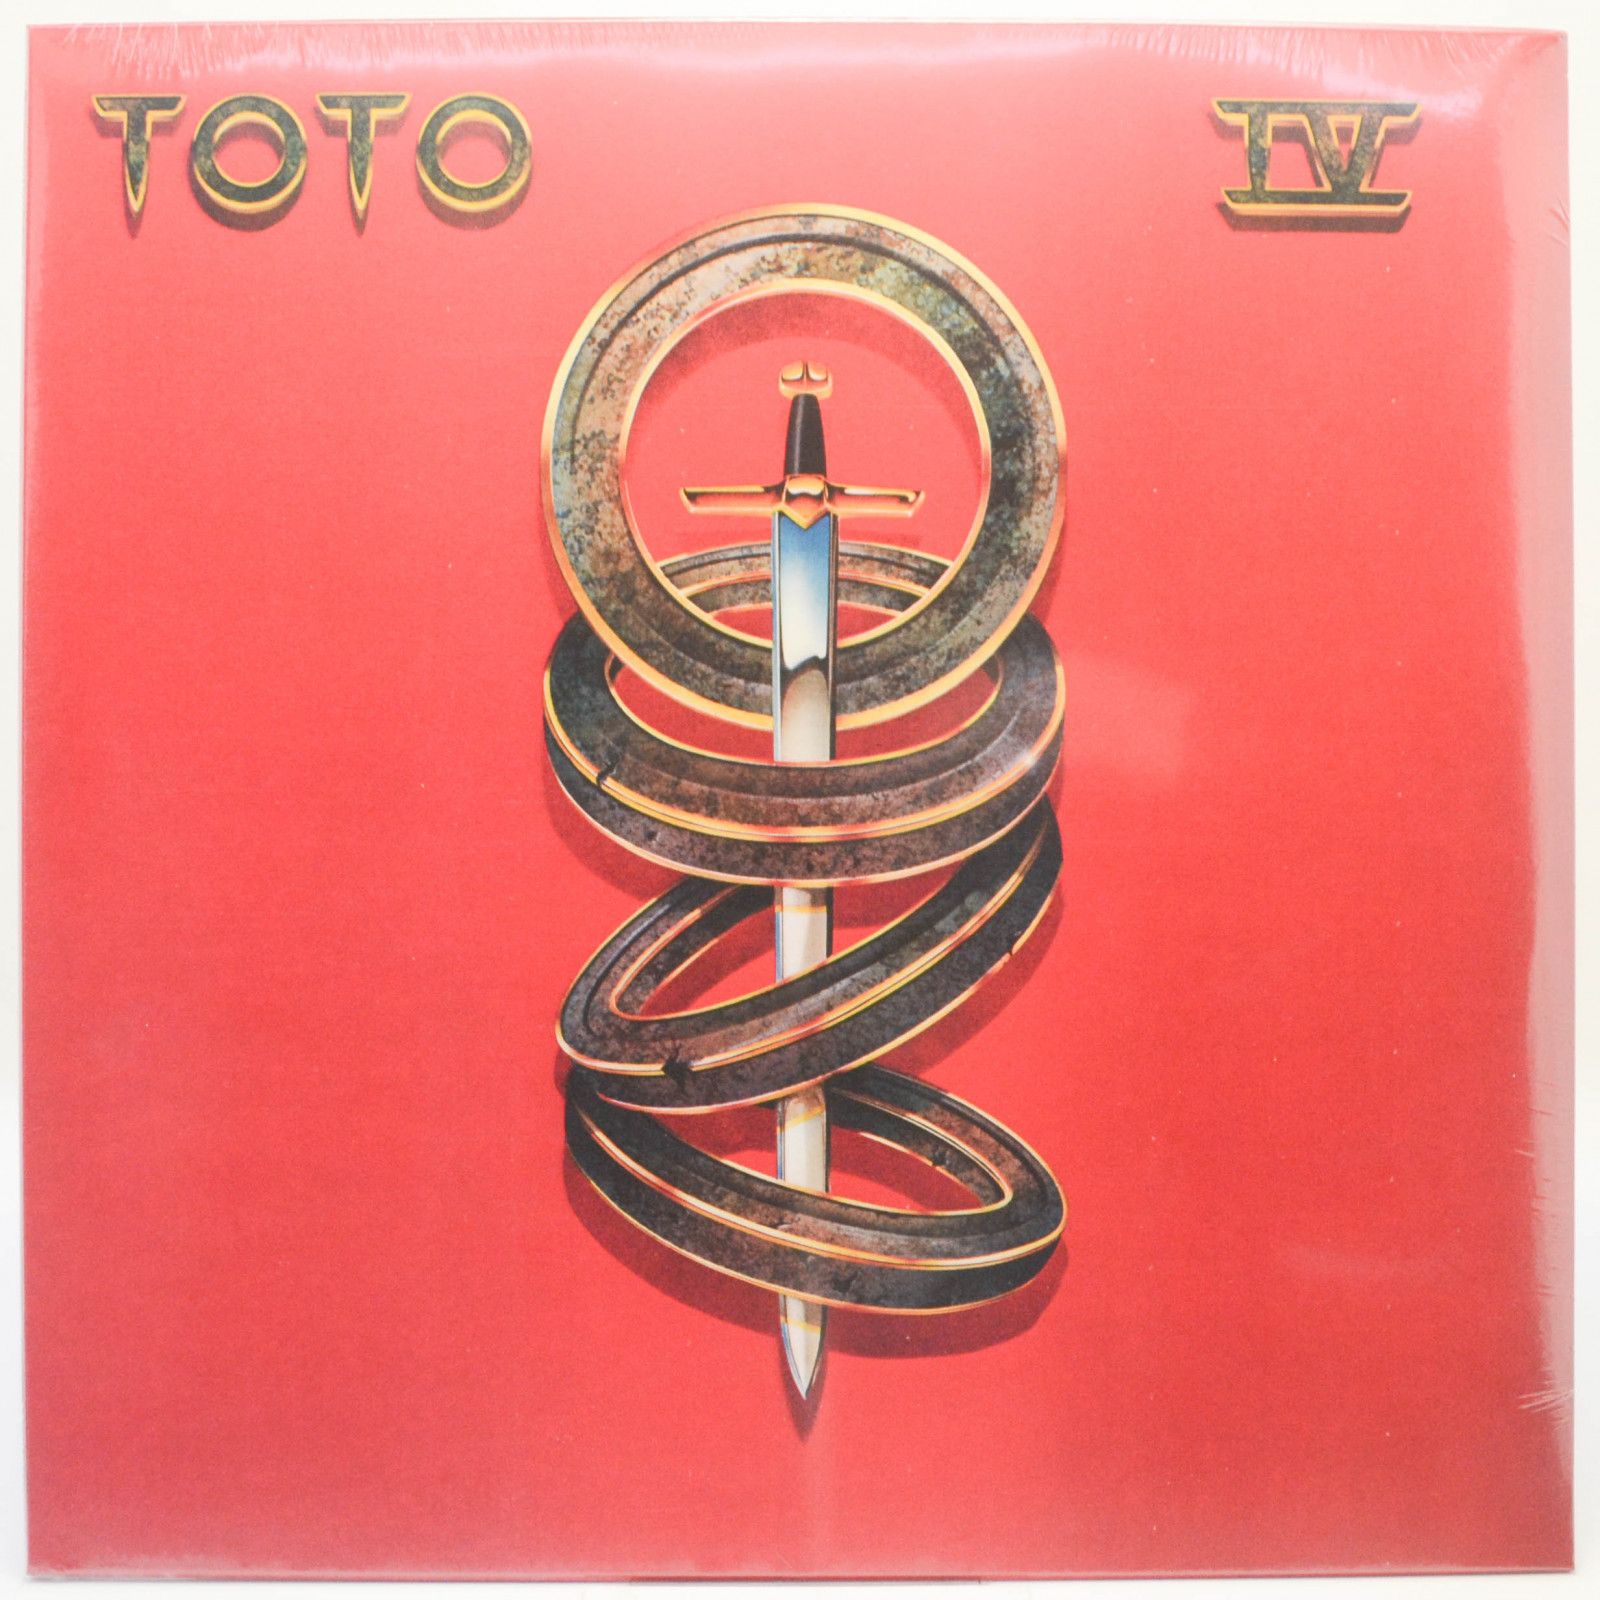 Toto — Toto IV, 1982